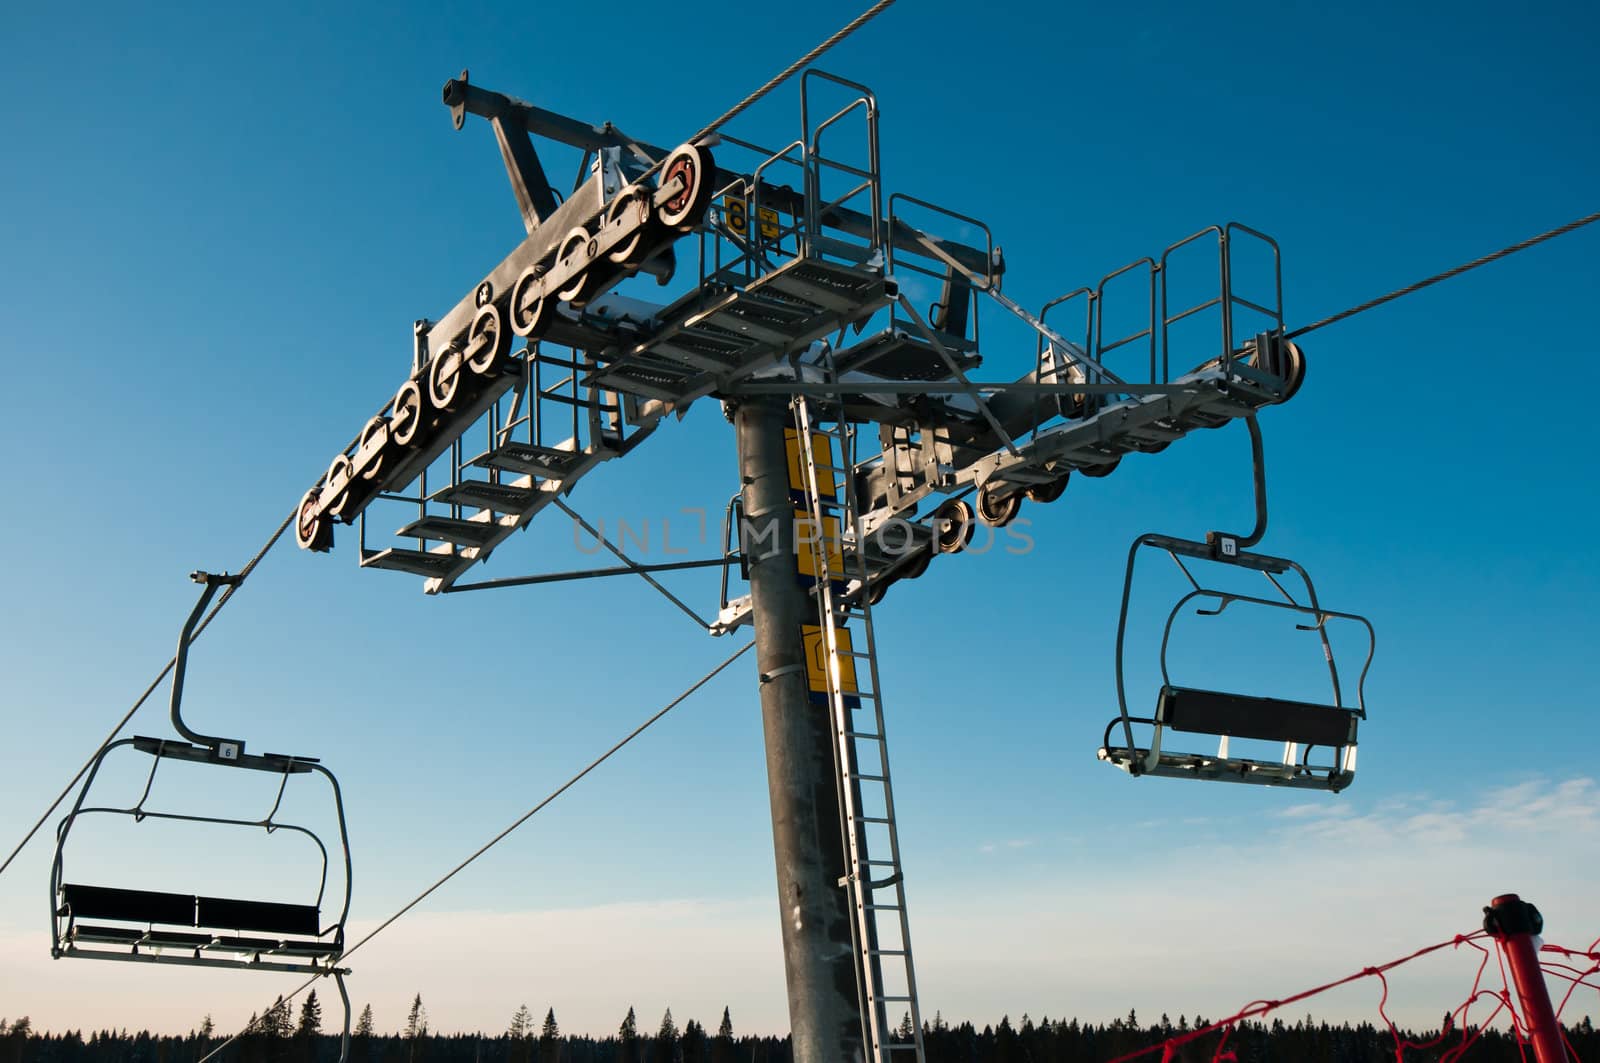 Ski-lift support close-up by dmitryelagin